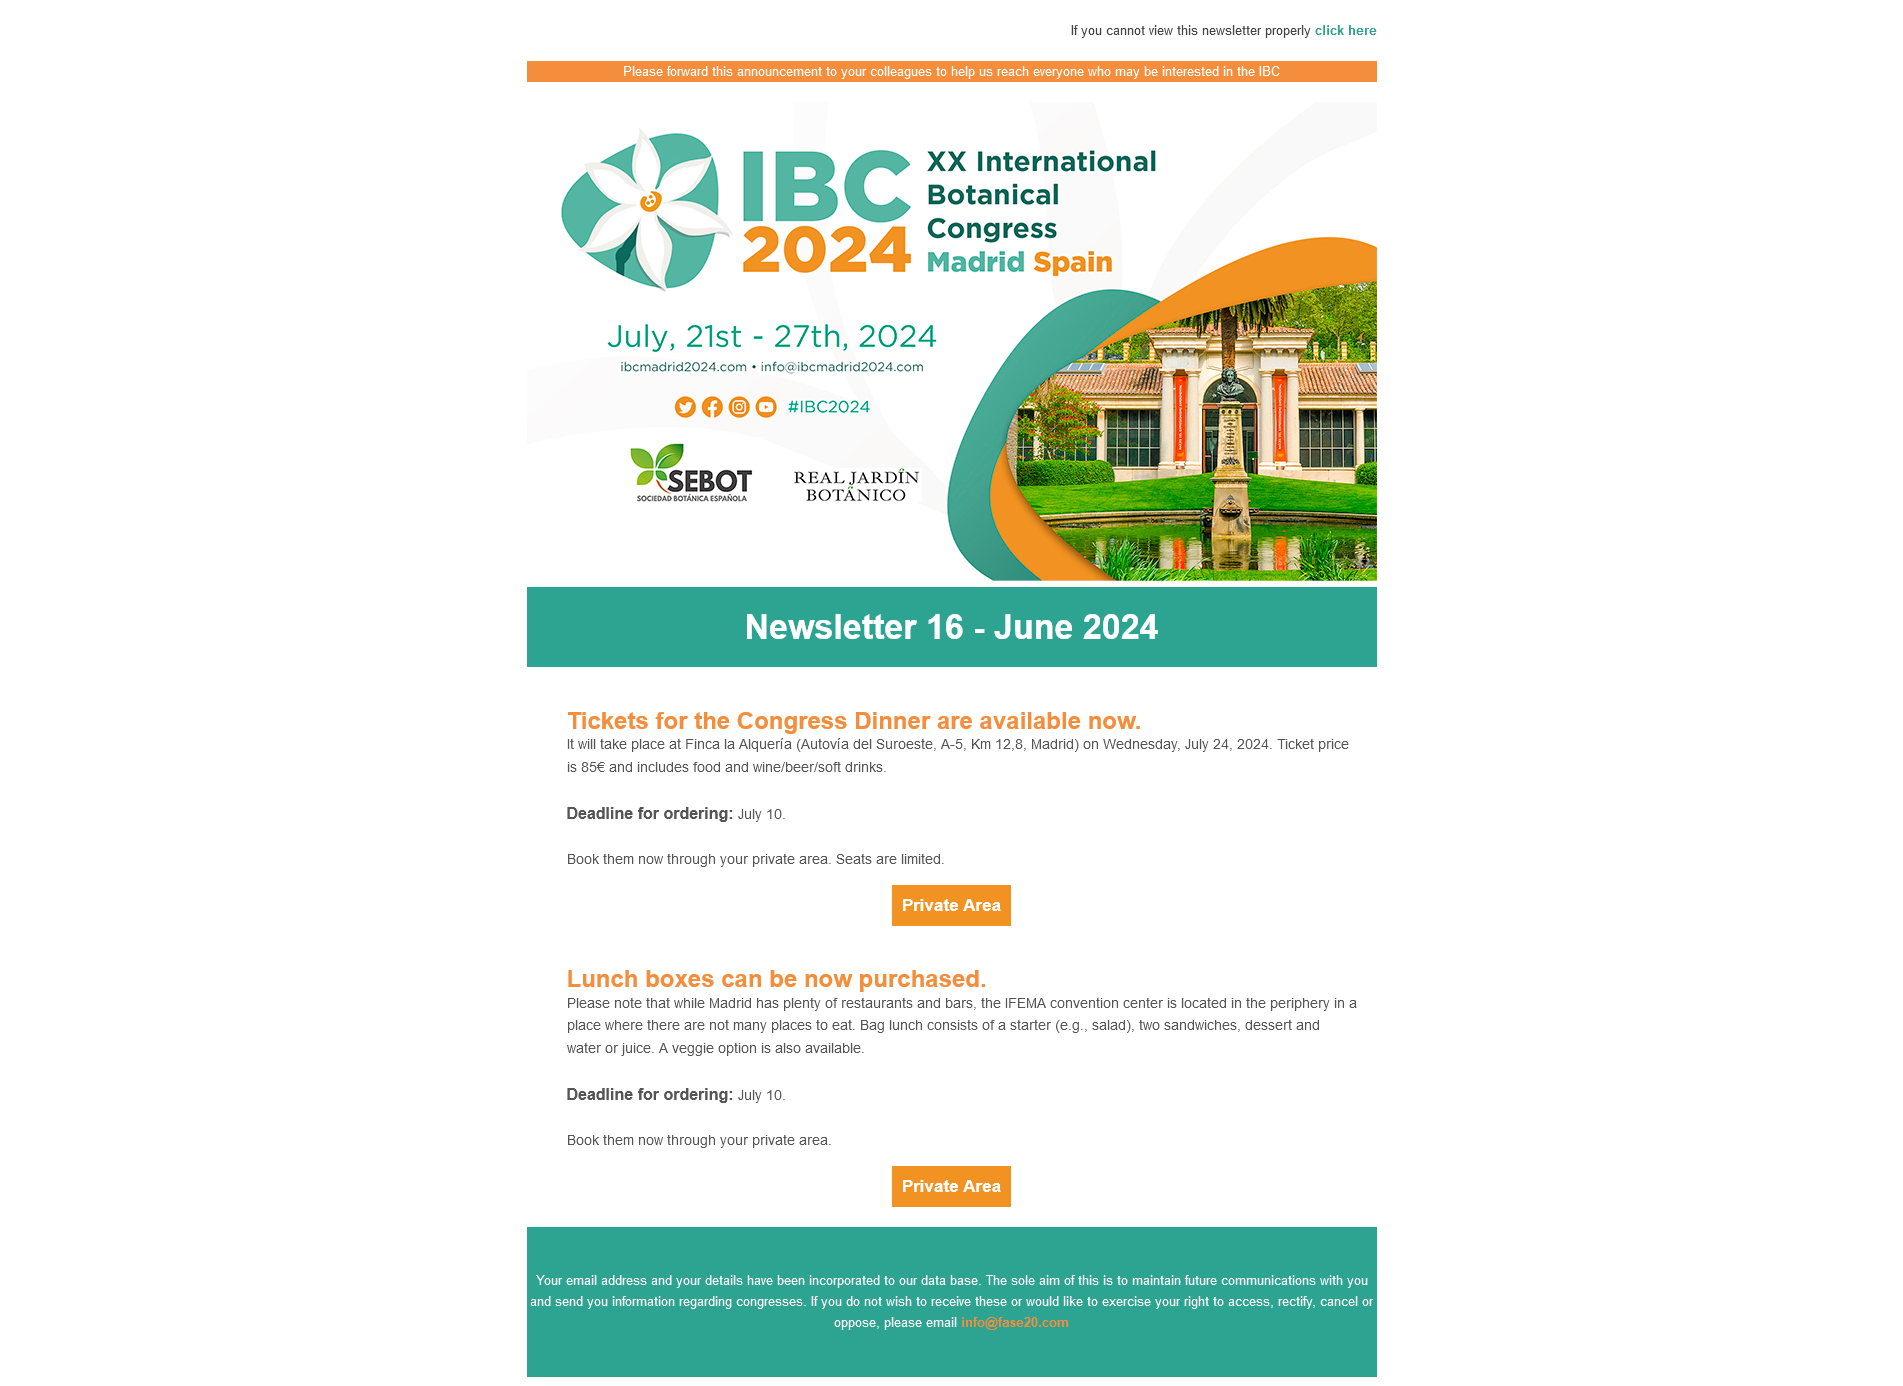 XX INTERNATIONAL BOTANICAL CONGRESS MADRID 2024 - Newsletter 16